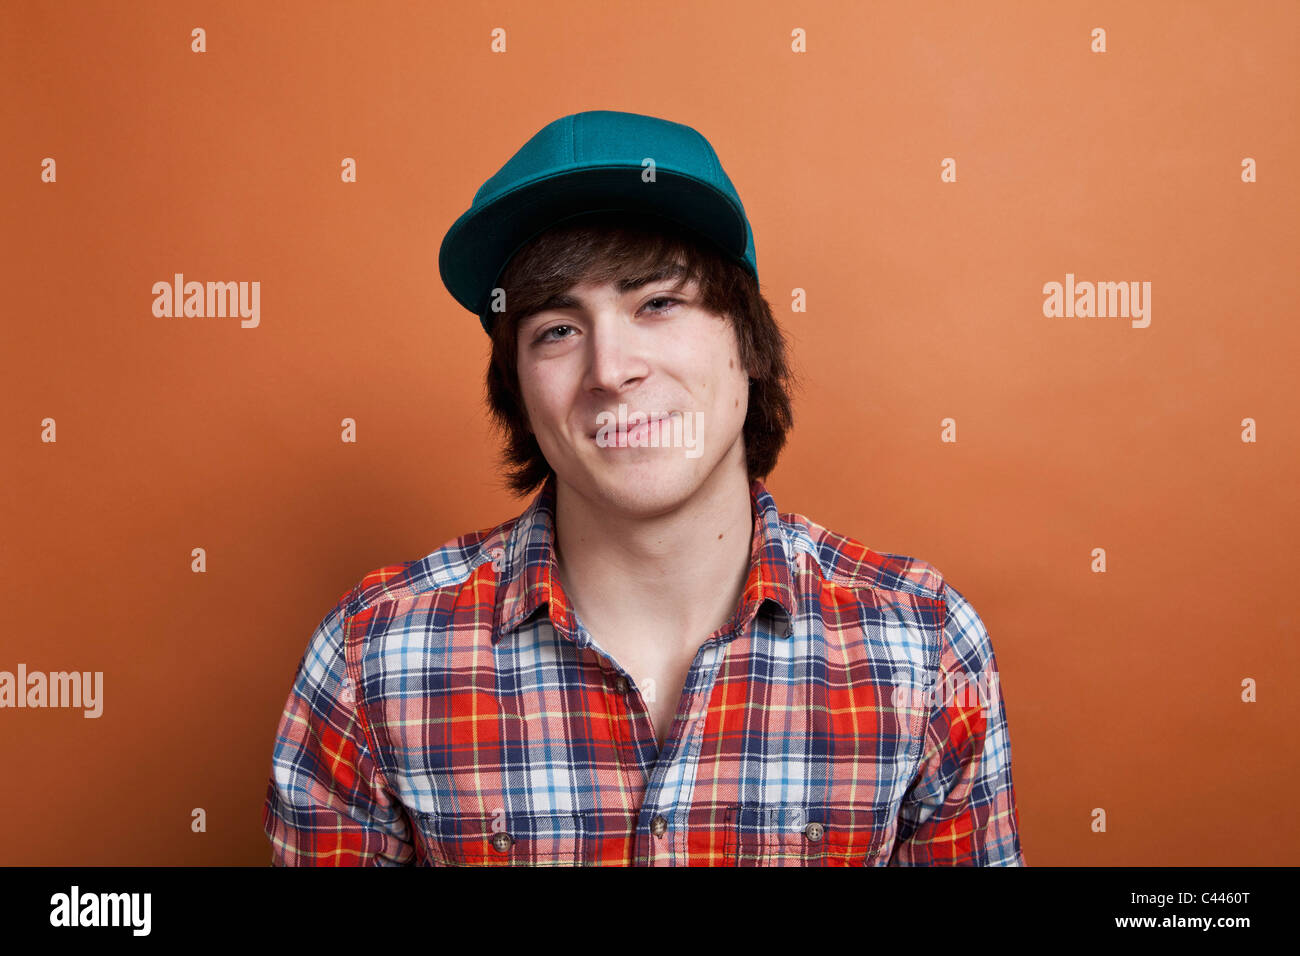 A teenage boy smiling, portrait, studio shot Stock Photo